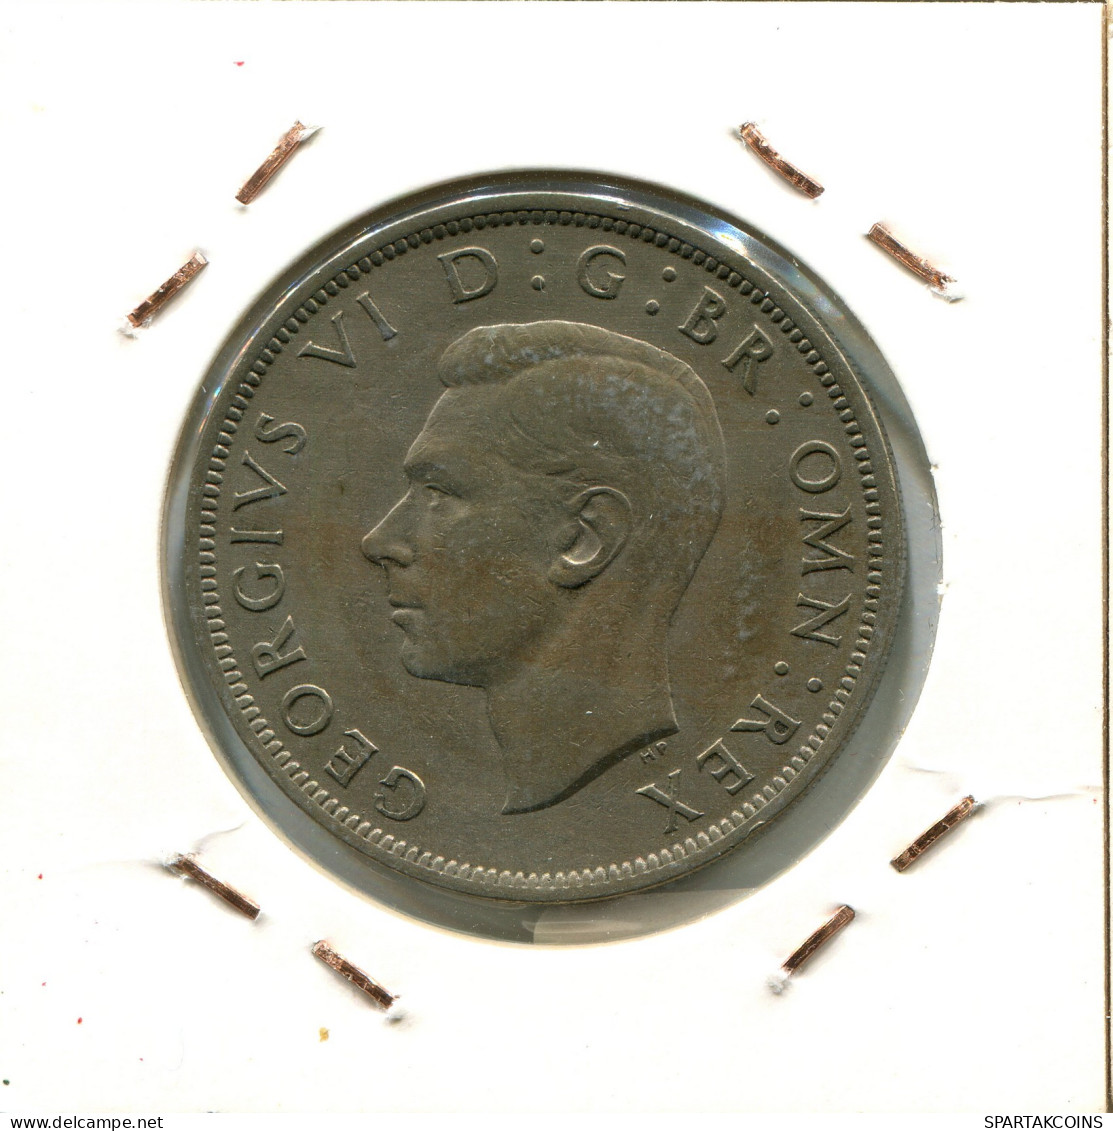 HALF CROWN 1947 UK GBAN BRETAÑA GREAT BRITAIN Moneda #AW154.E - K. 1/2 Crown